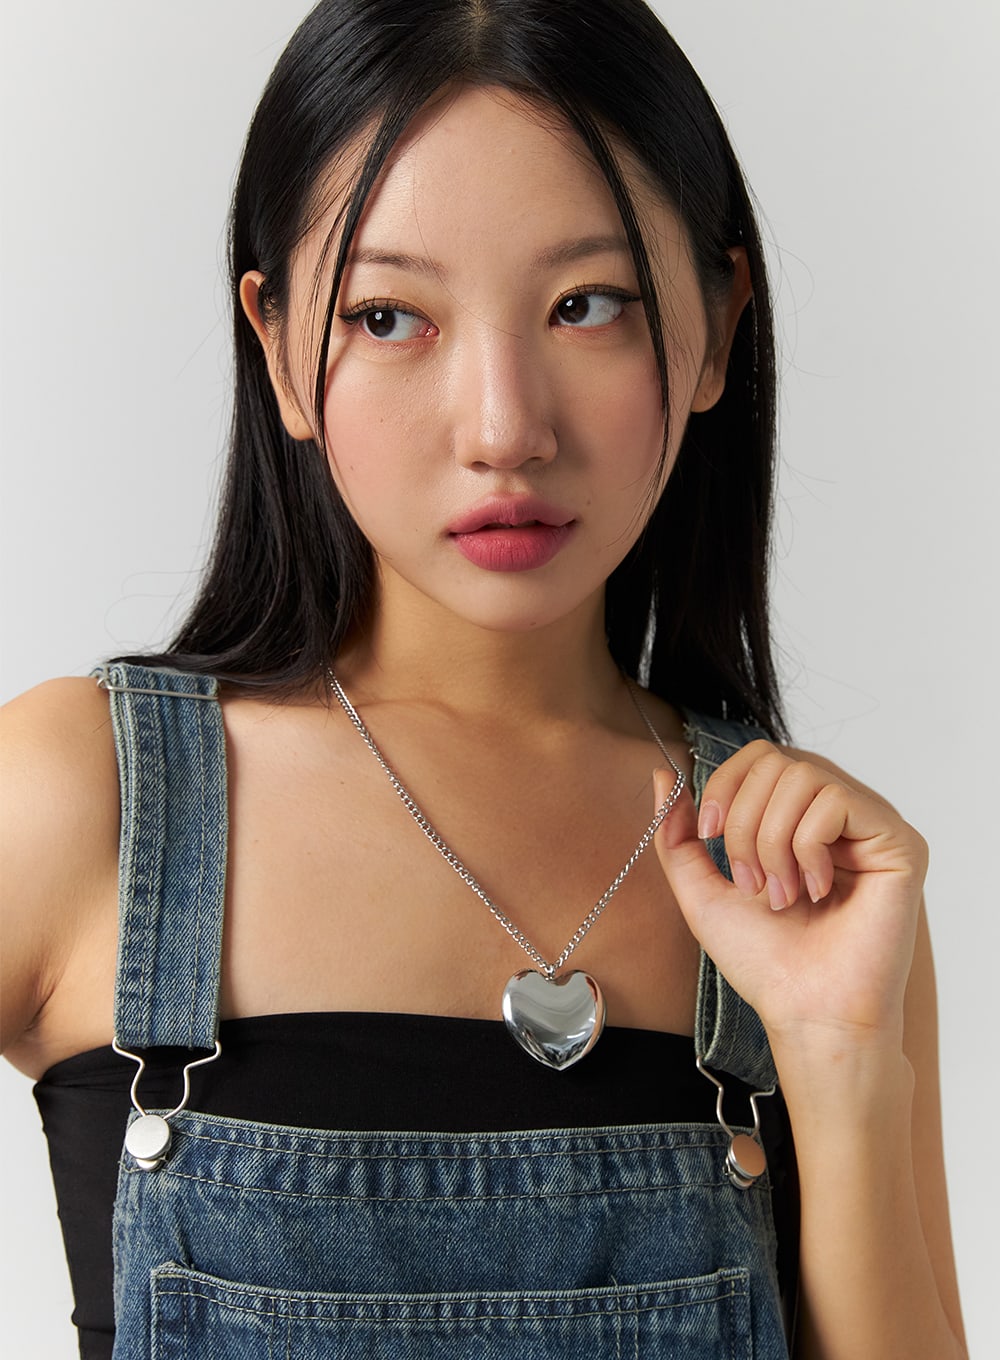 heart-pendant-necklace-cs326